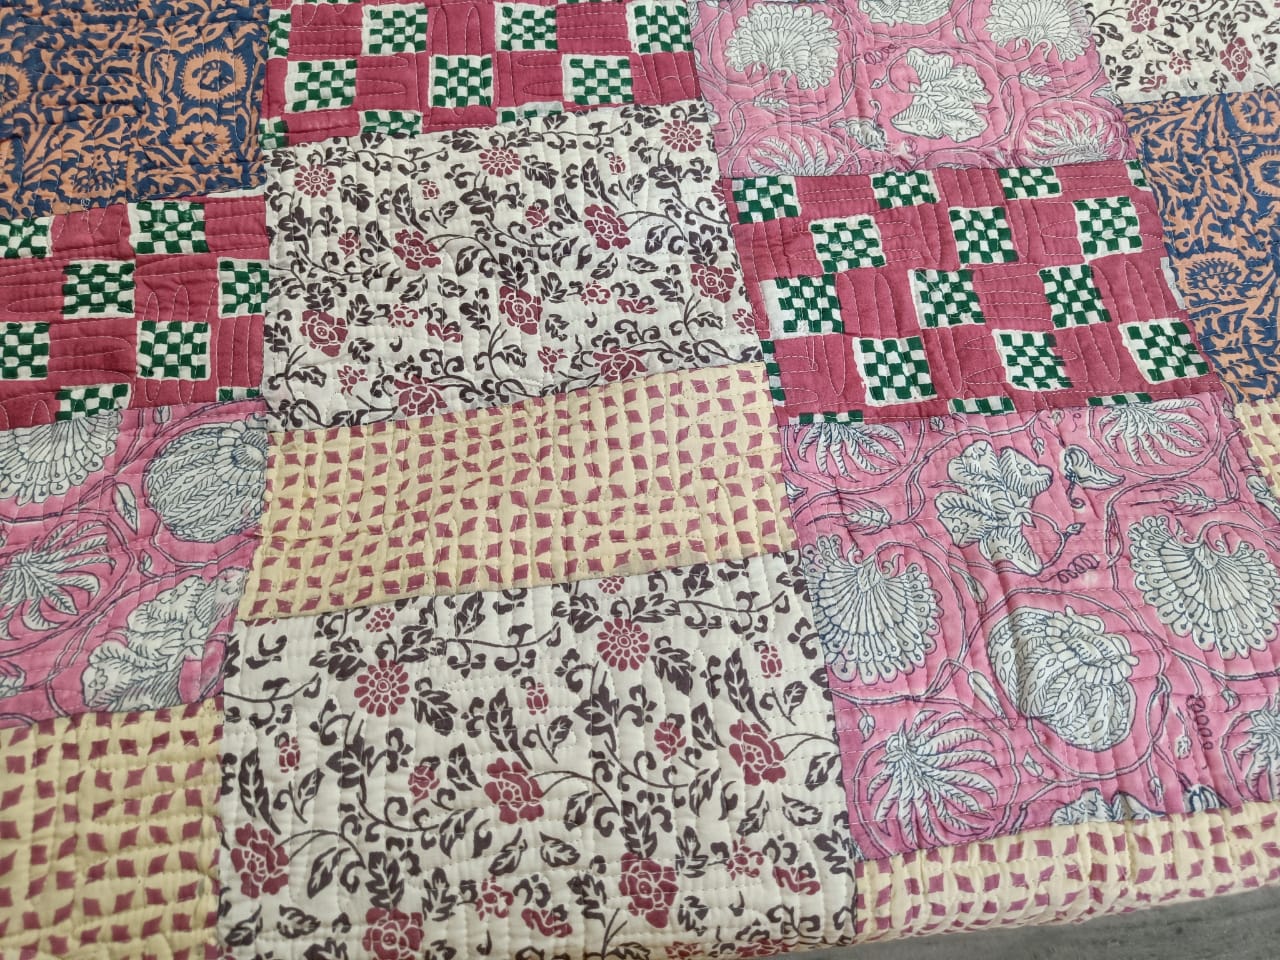 Roysha 2022 All Season Handmade Lightweight Queen Quilt, Jaipuri Prism Patchwork, Queen Bedspread, 100% Cotton Throw, Pink & Grey